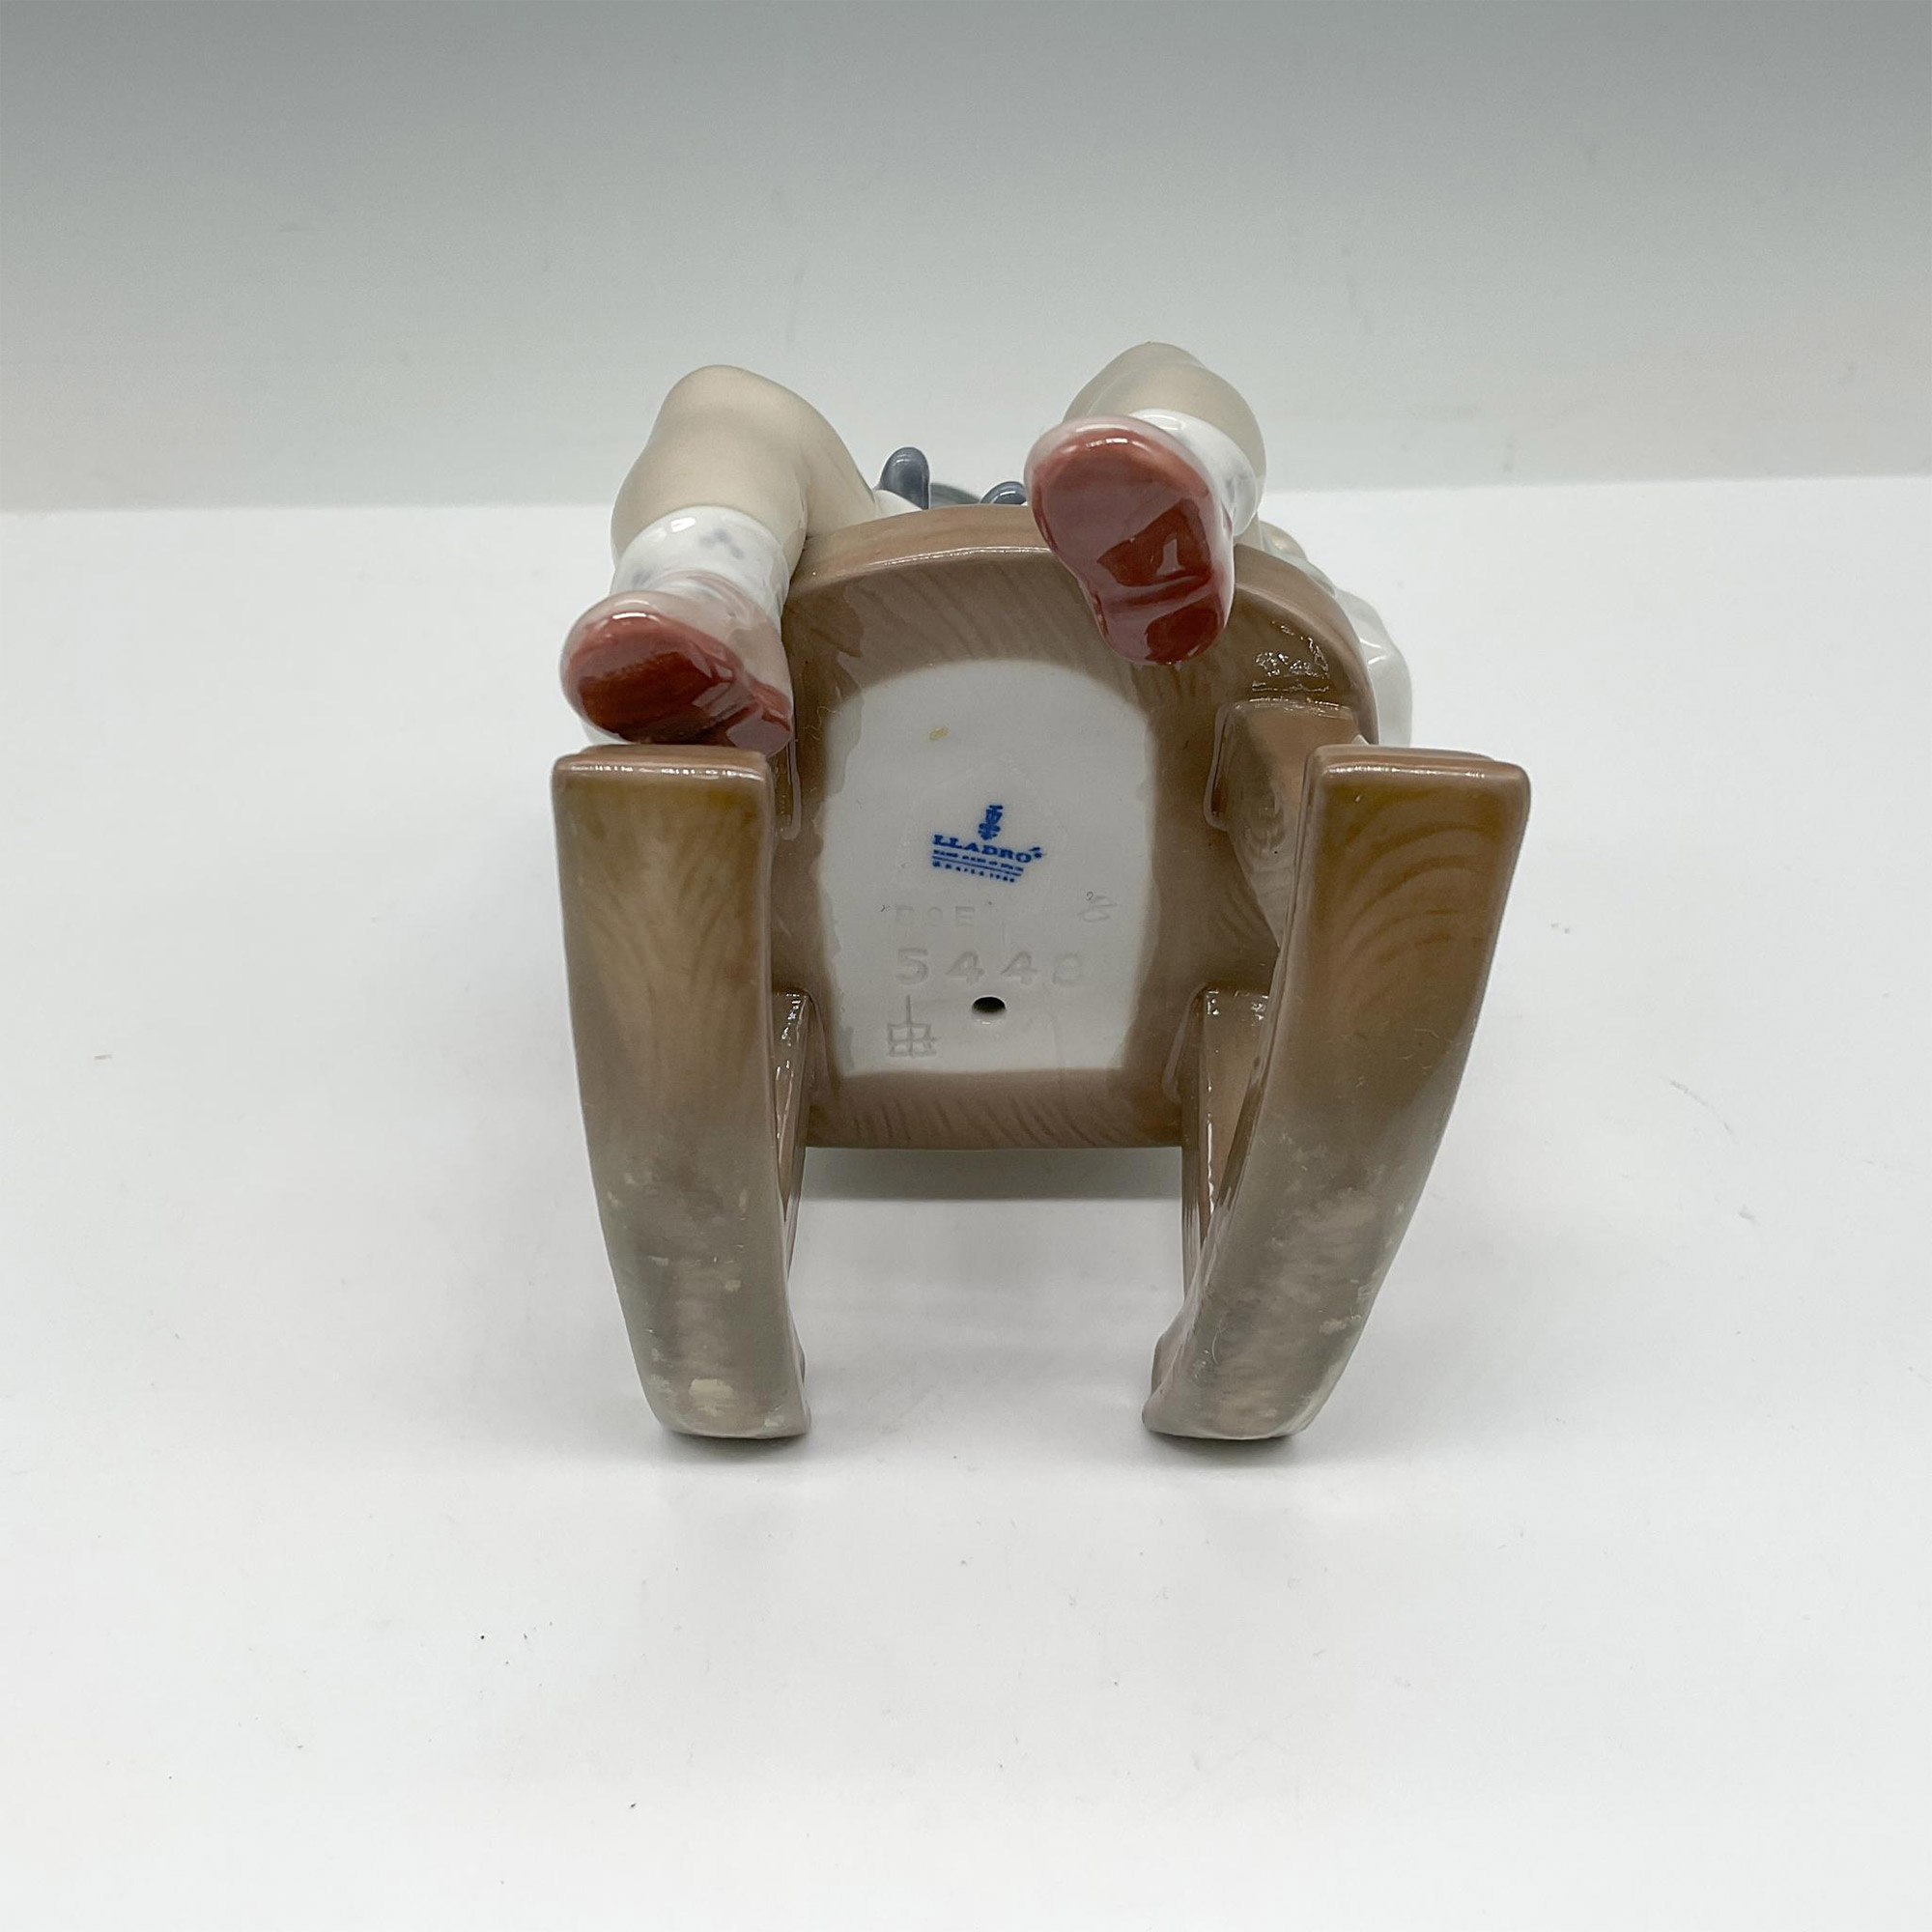 Naptime 1005448 - Lladro Porcelain Figurine - Image 3 of 3